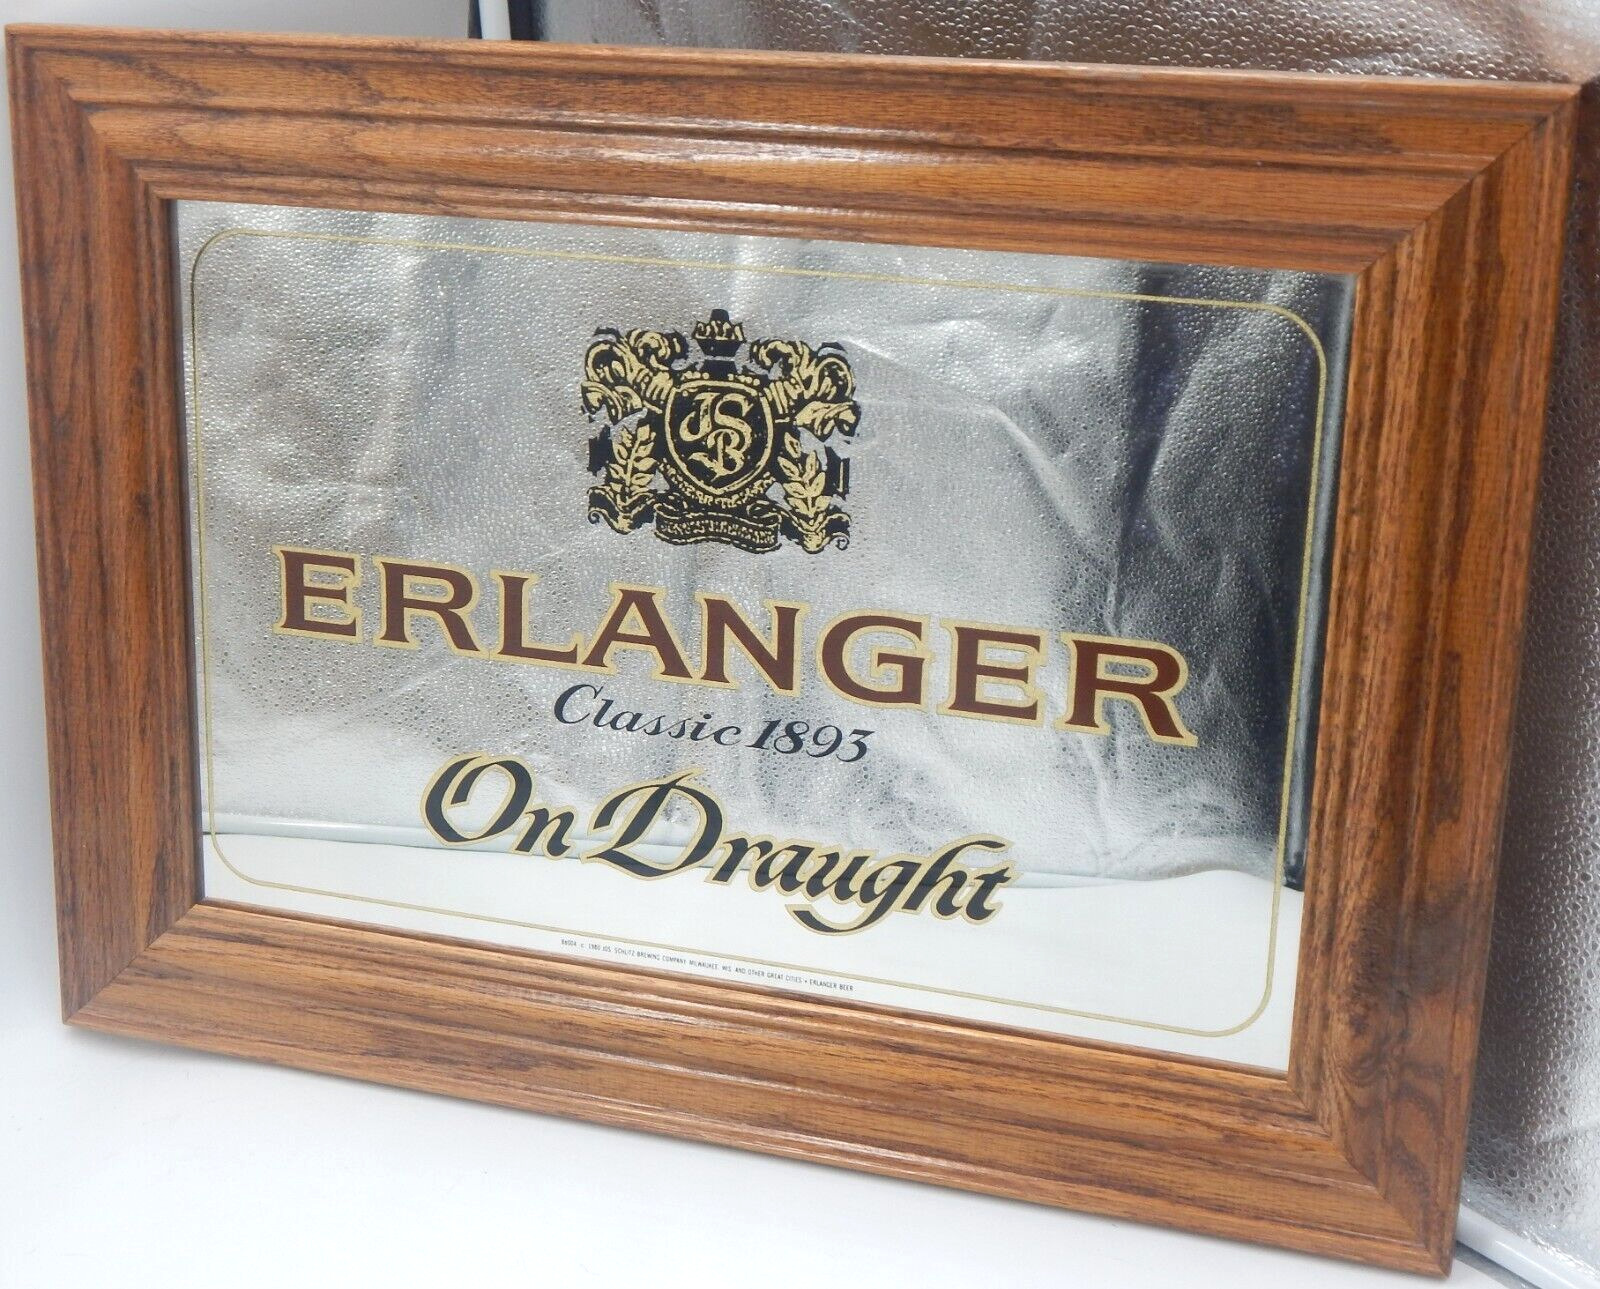 VTG 1980 Bar Mirror Erlanger Classic 1893 On Draught Schlitz Advertising Sign